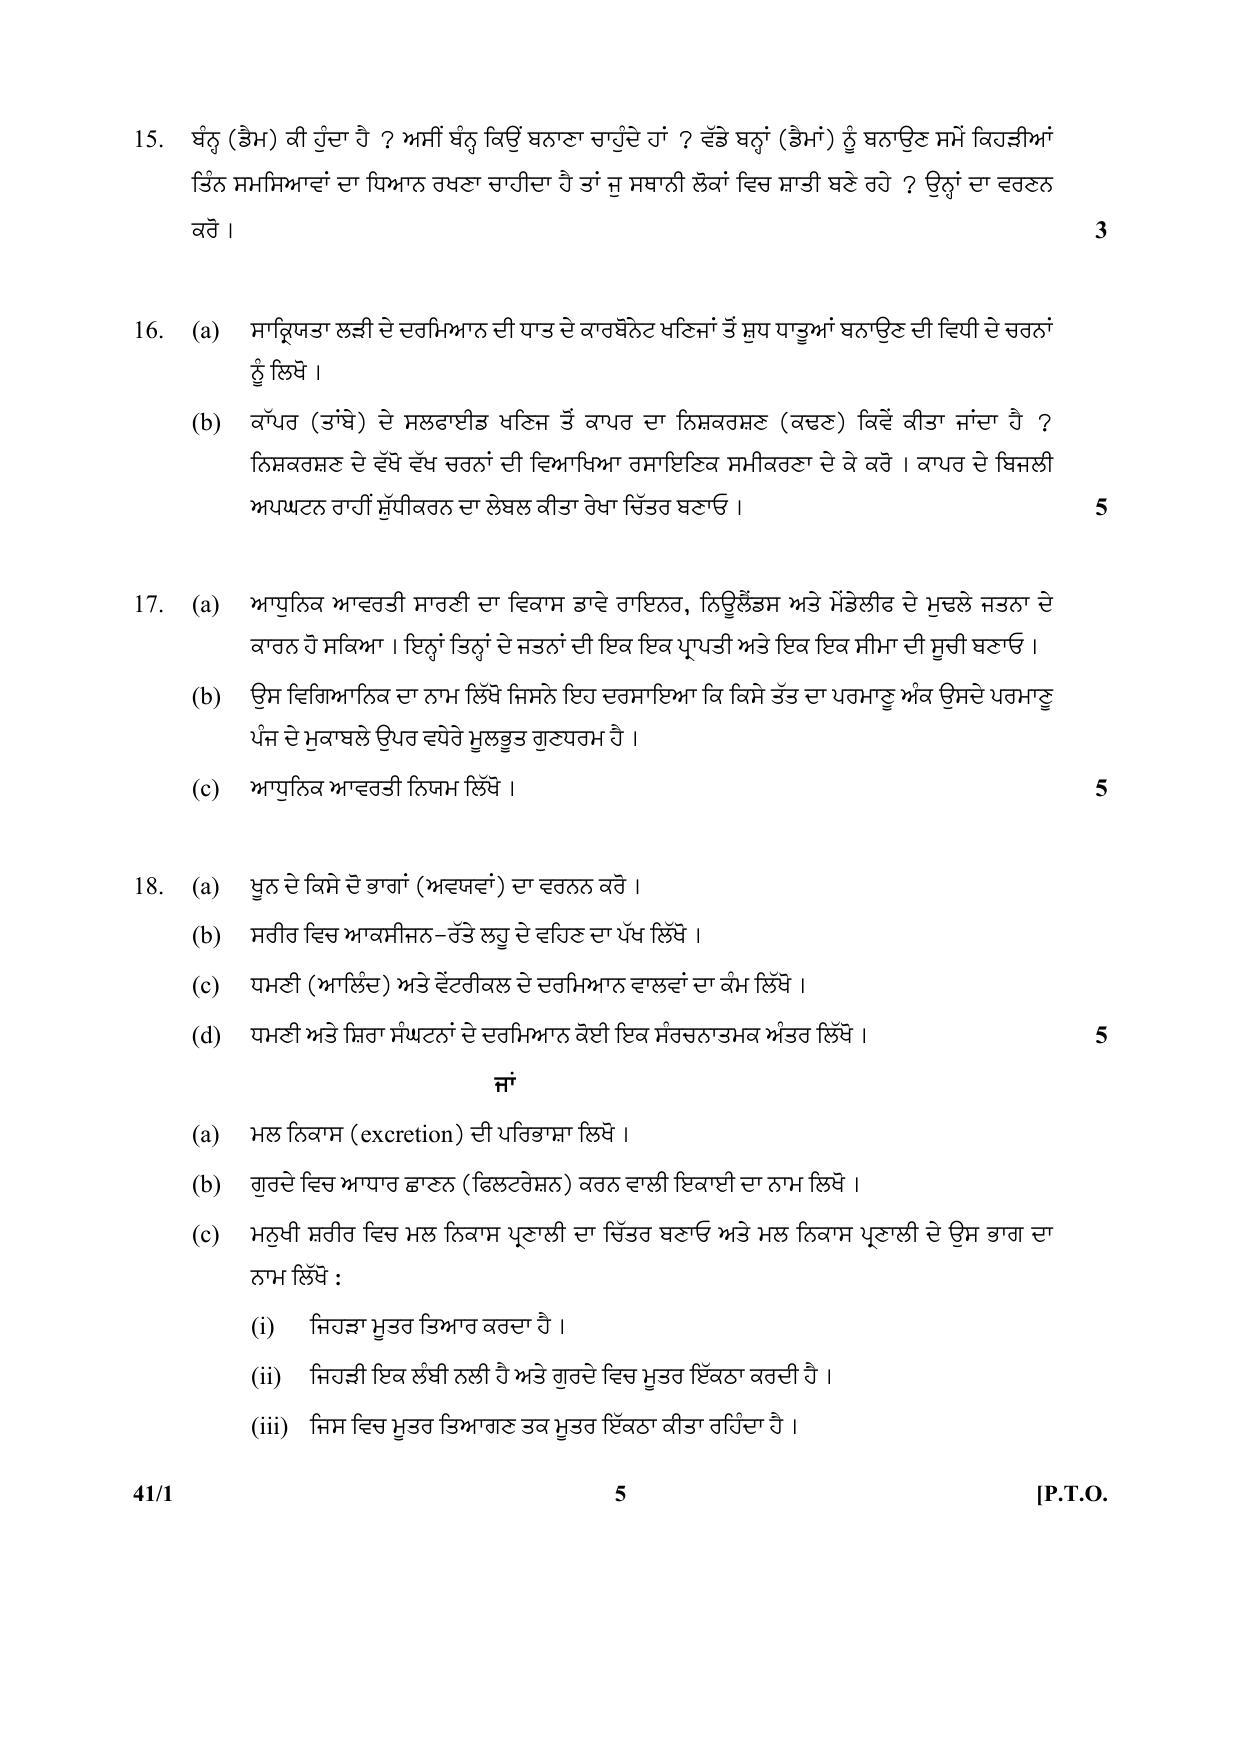 CBSE Class 10 41-1 (Science)_Punjabi 2018 Question Paper - Page 5